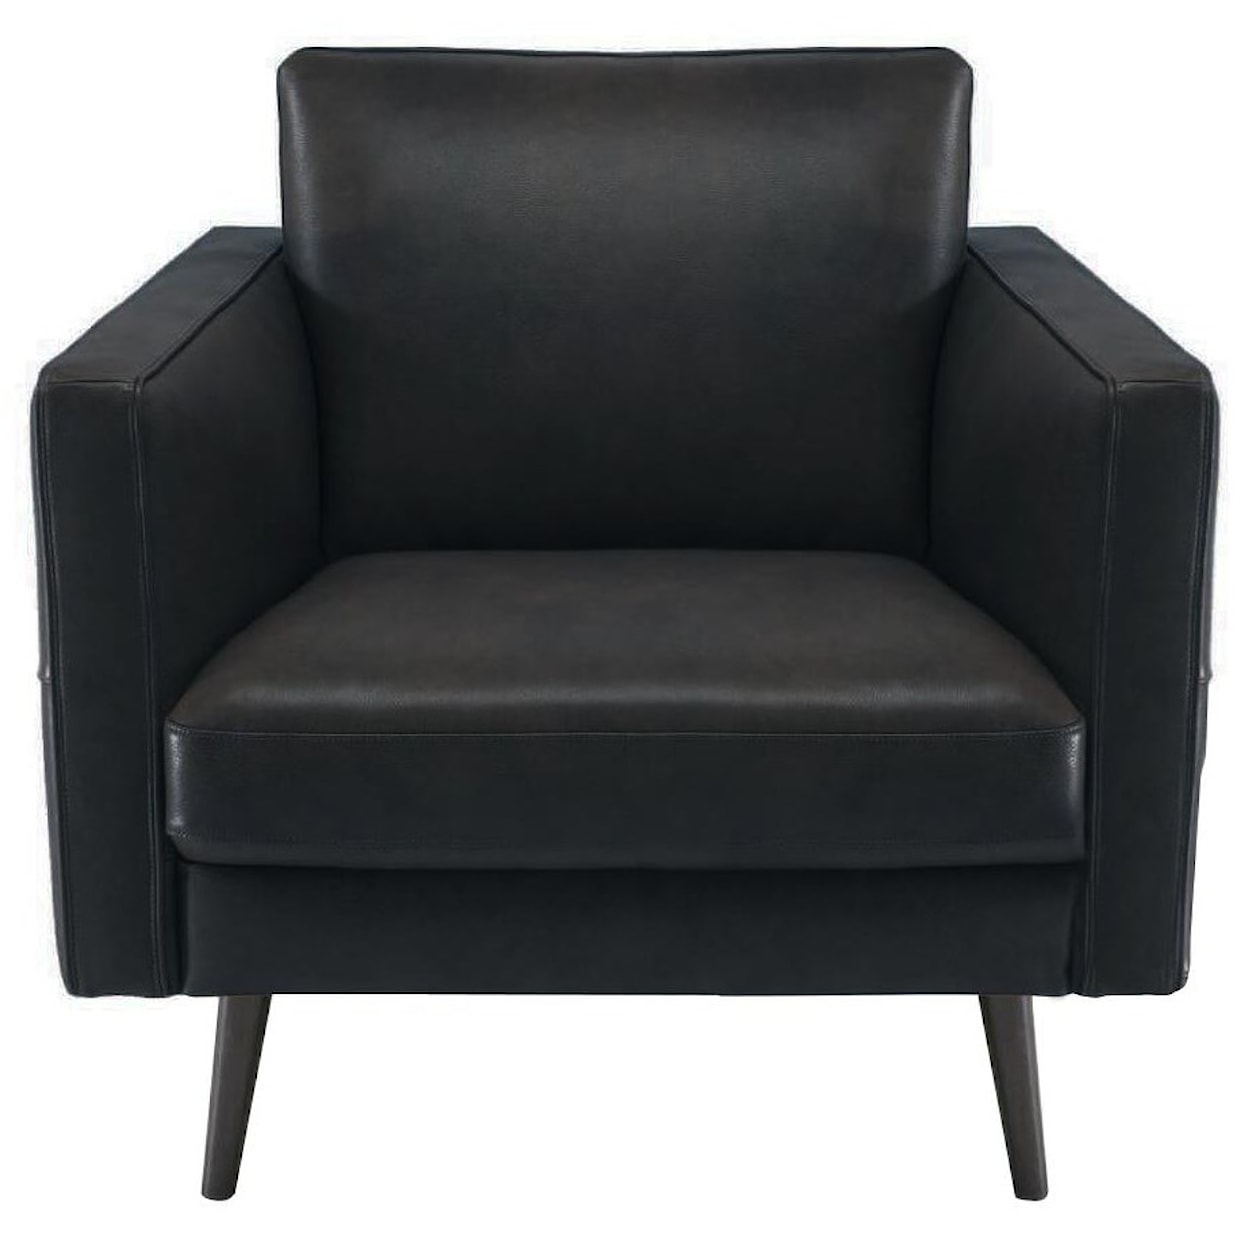 Natuzzi Editions 100% Italian Leather Chair